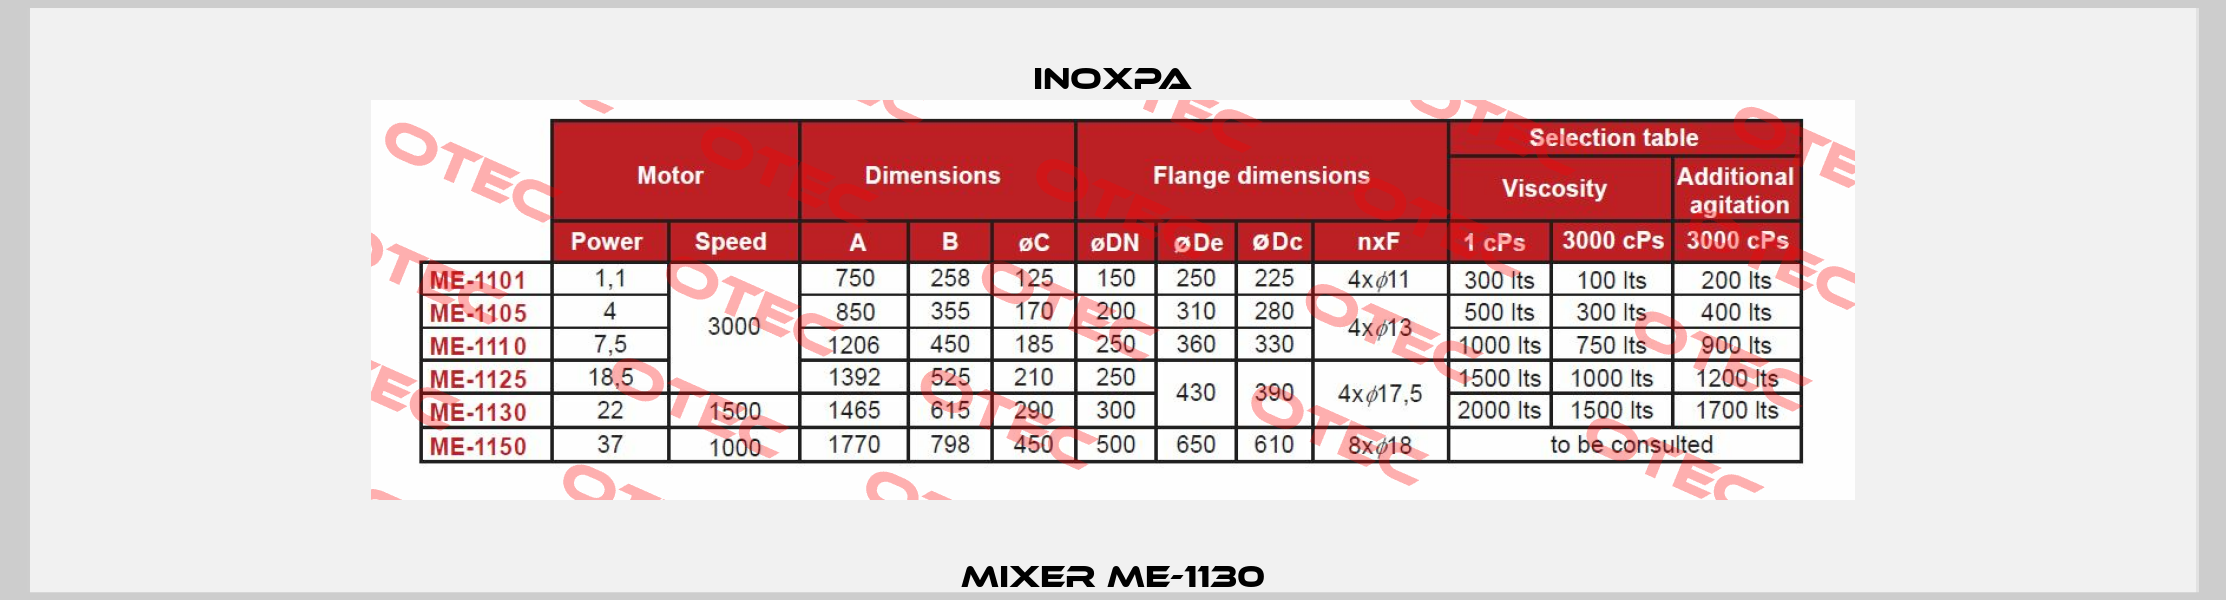 MIXER ME-1130 Inoxpa